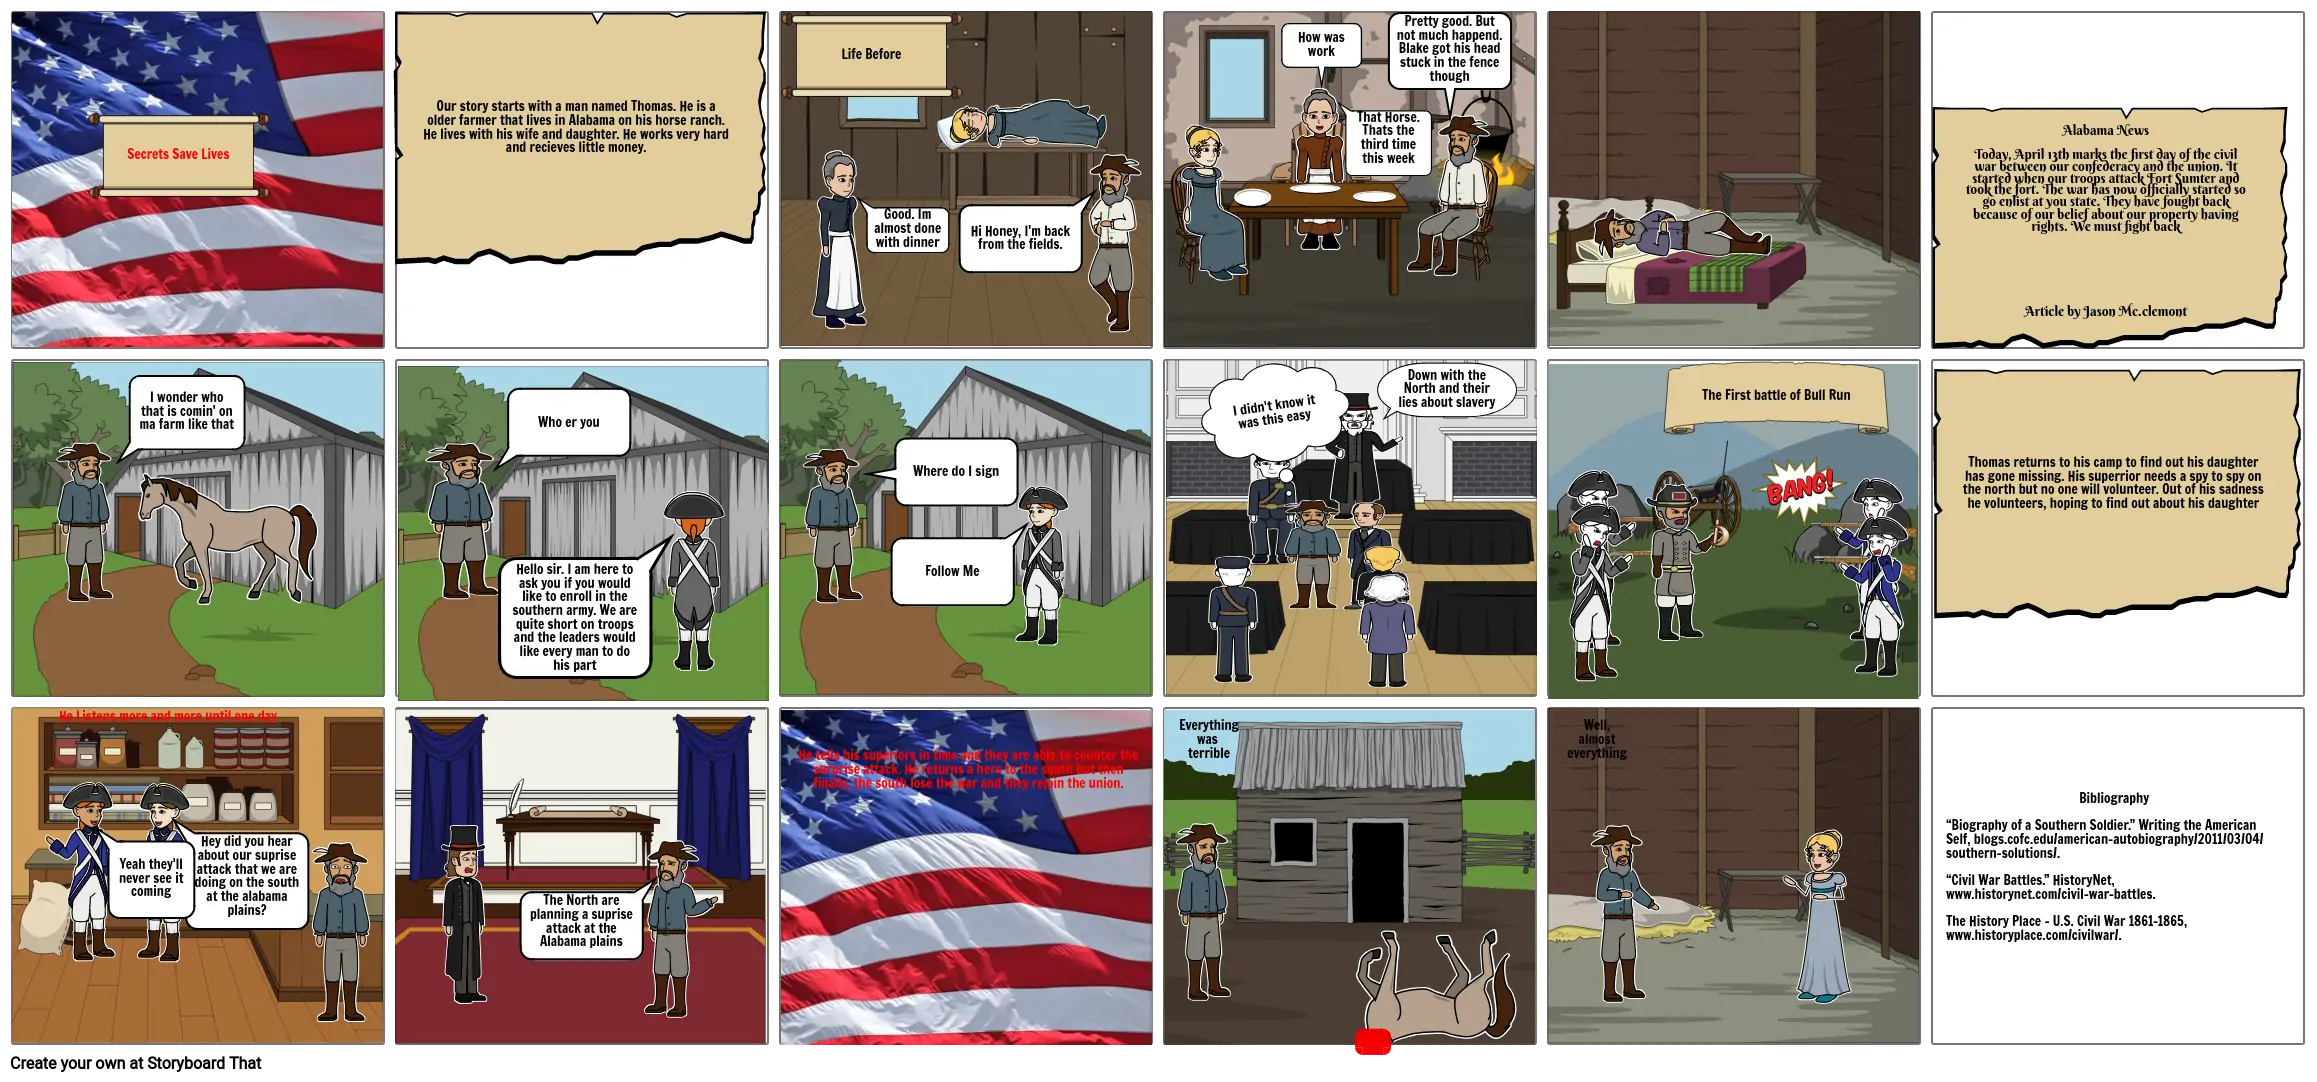 The Civil war comic. A US History comic book